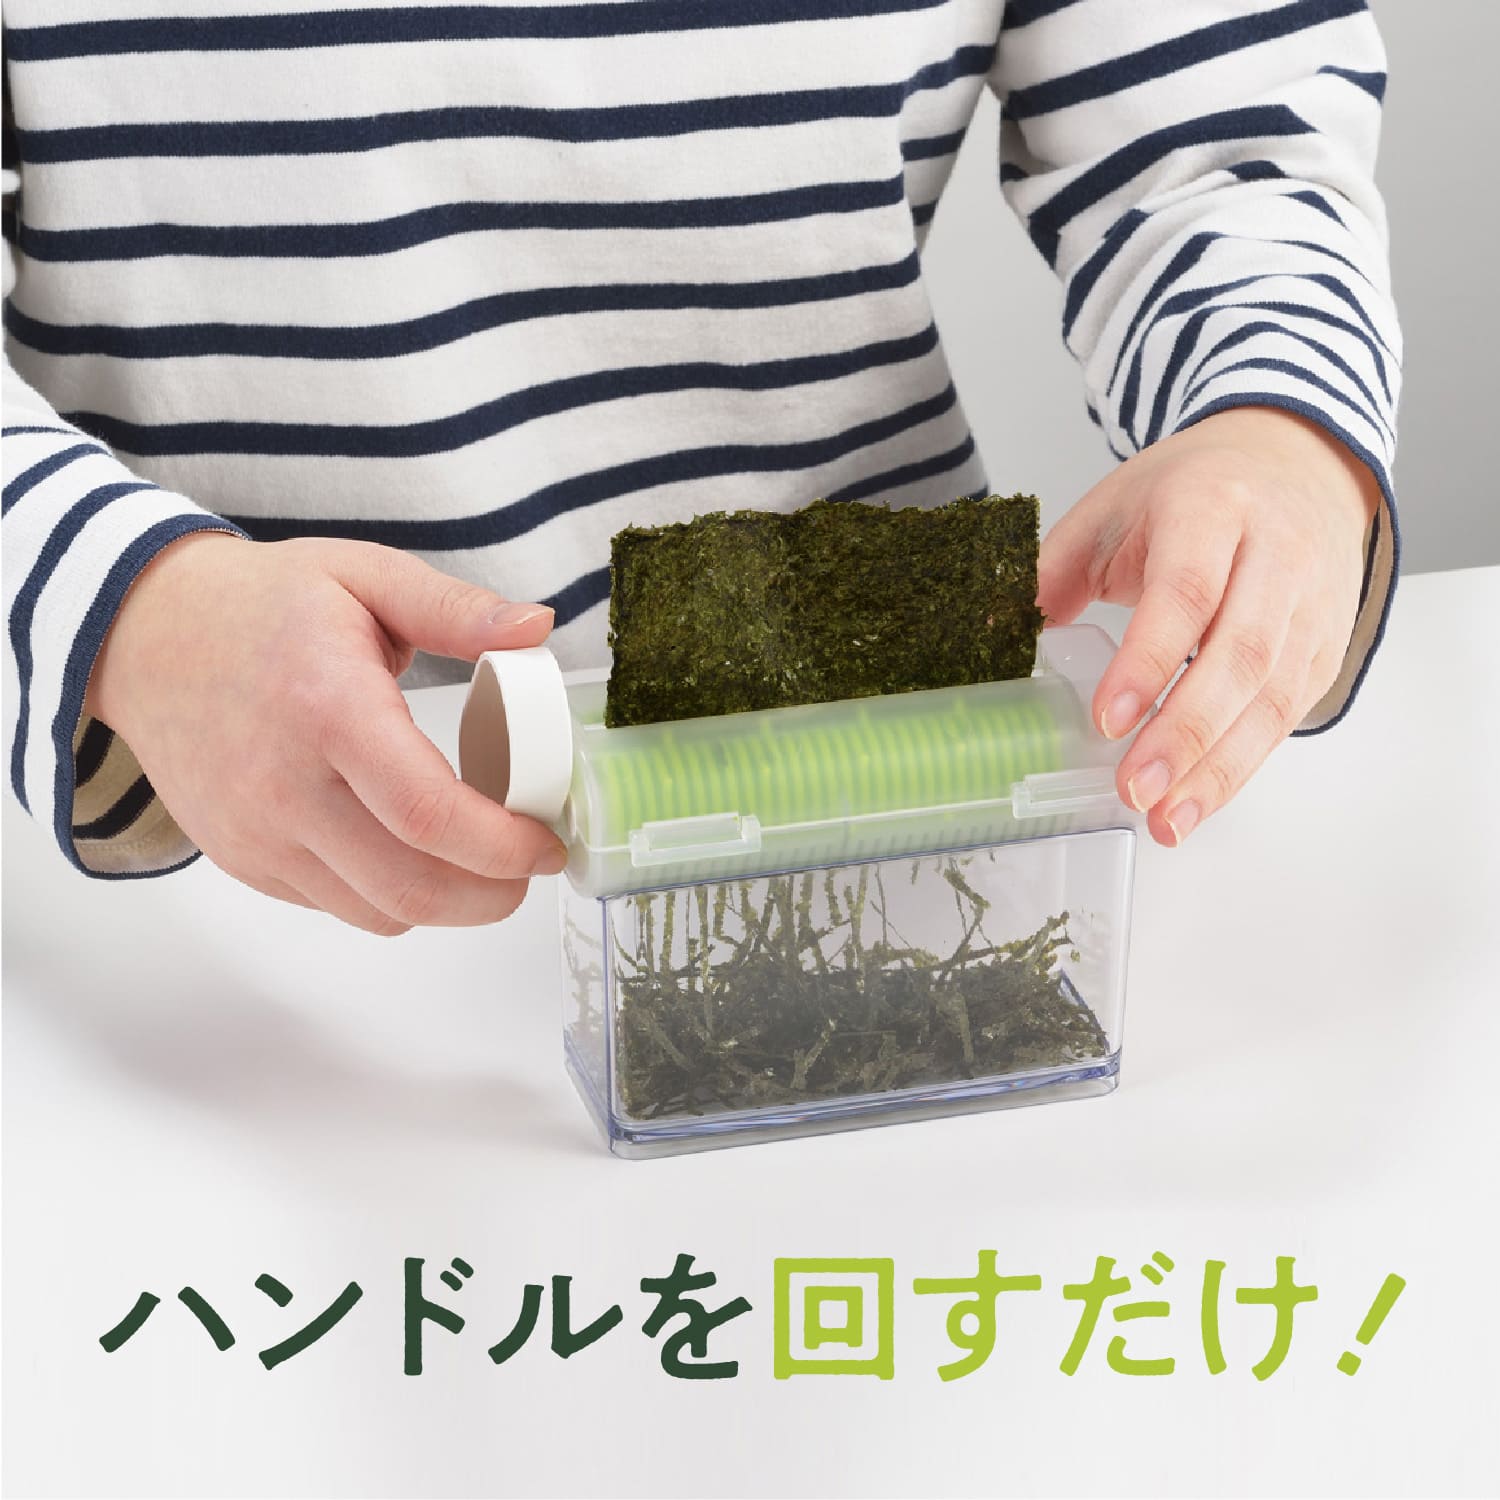 JapanBargain Japanese Sushi Rice Cake Spam Musubi Press Mold Maker